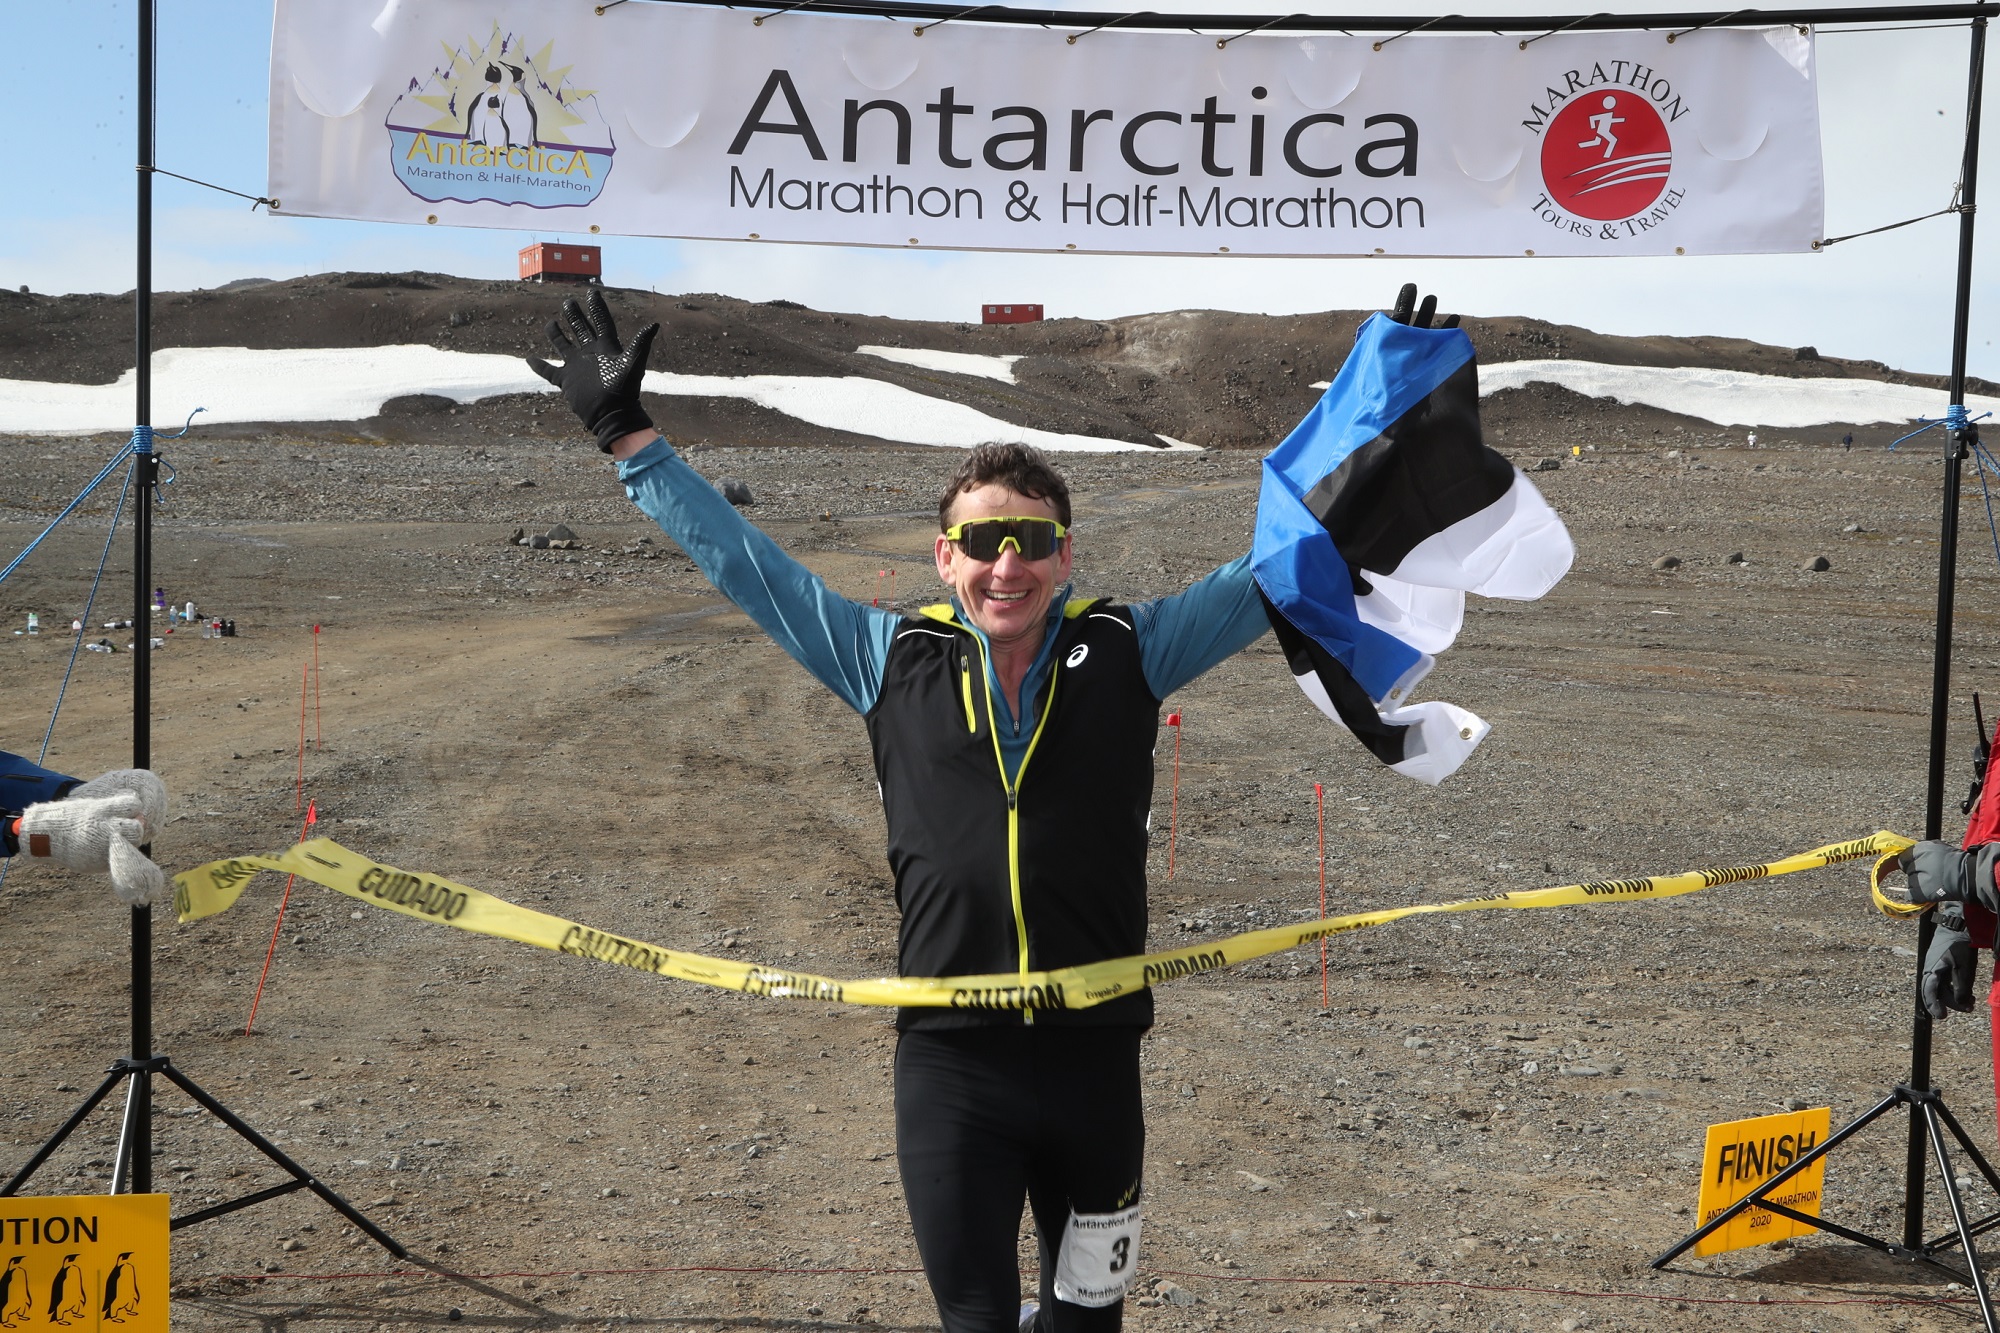 The Antarctica Marathon & Half-Marathon Returns to King George Island